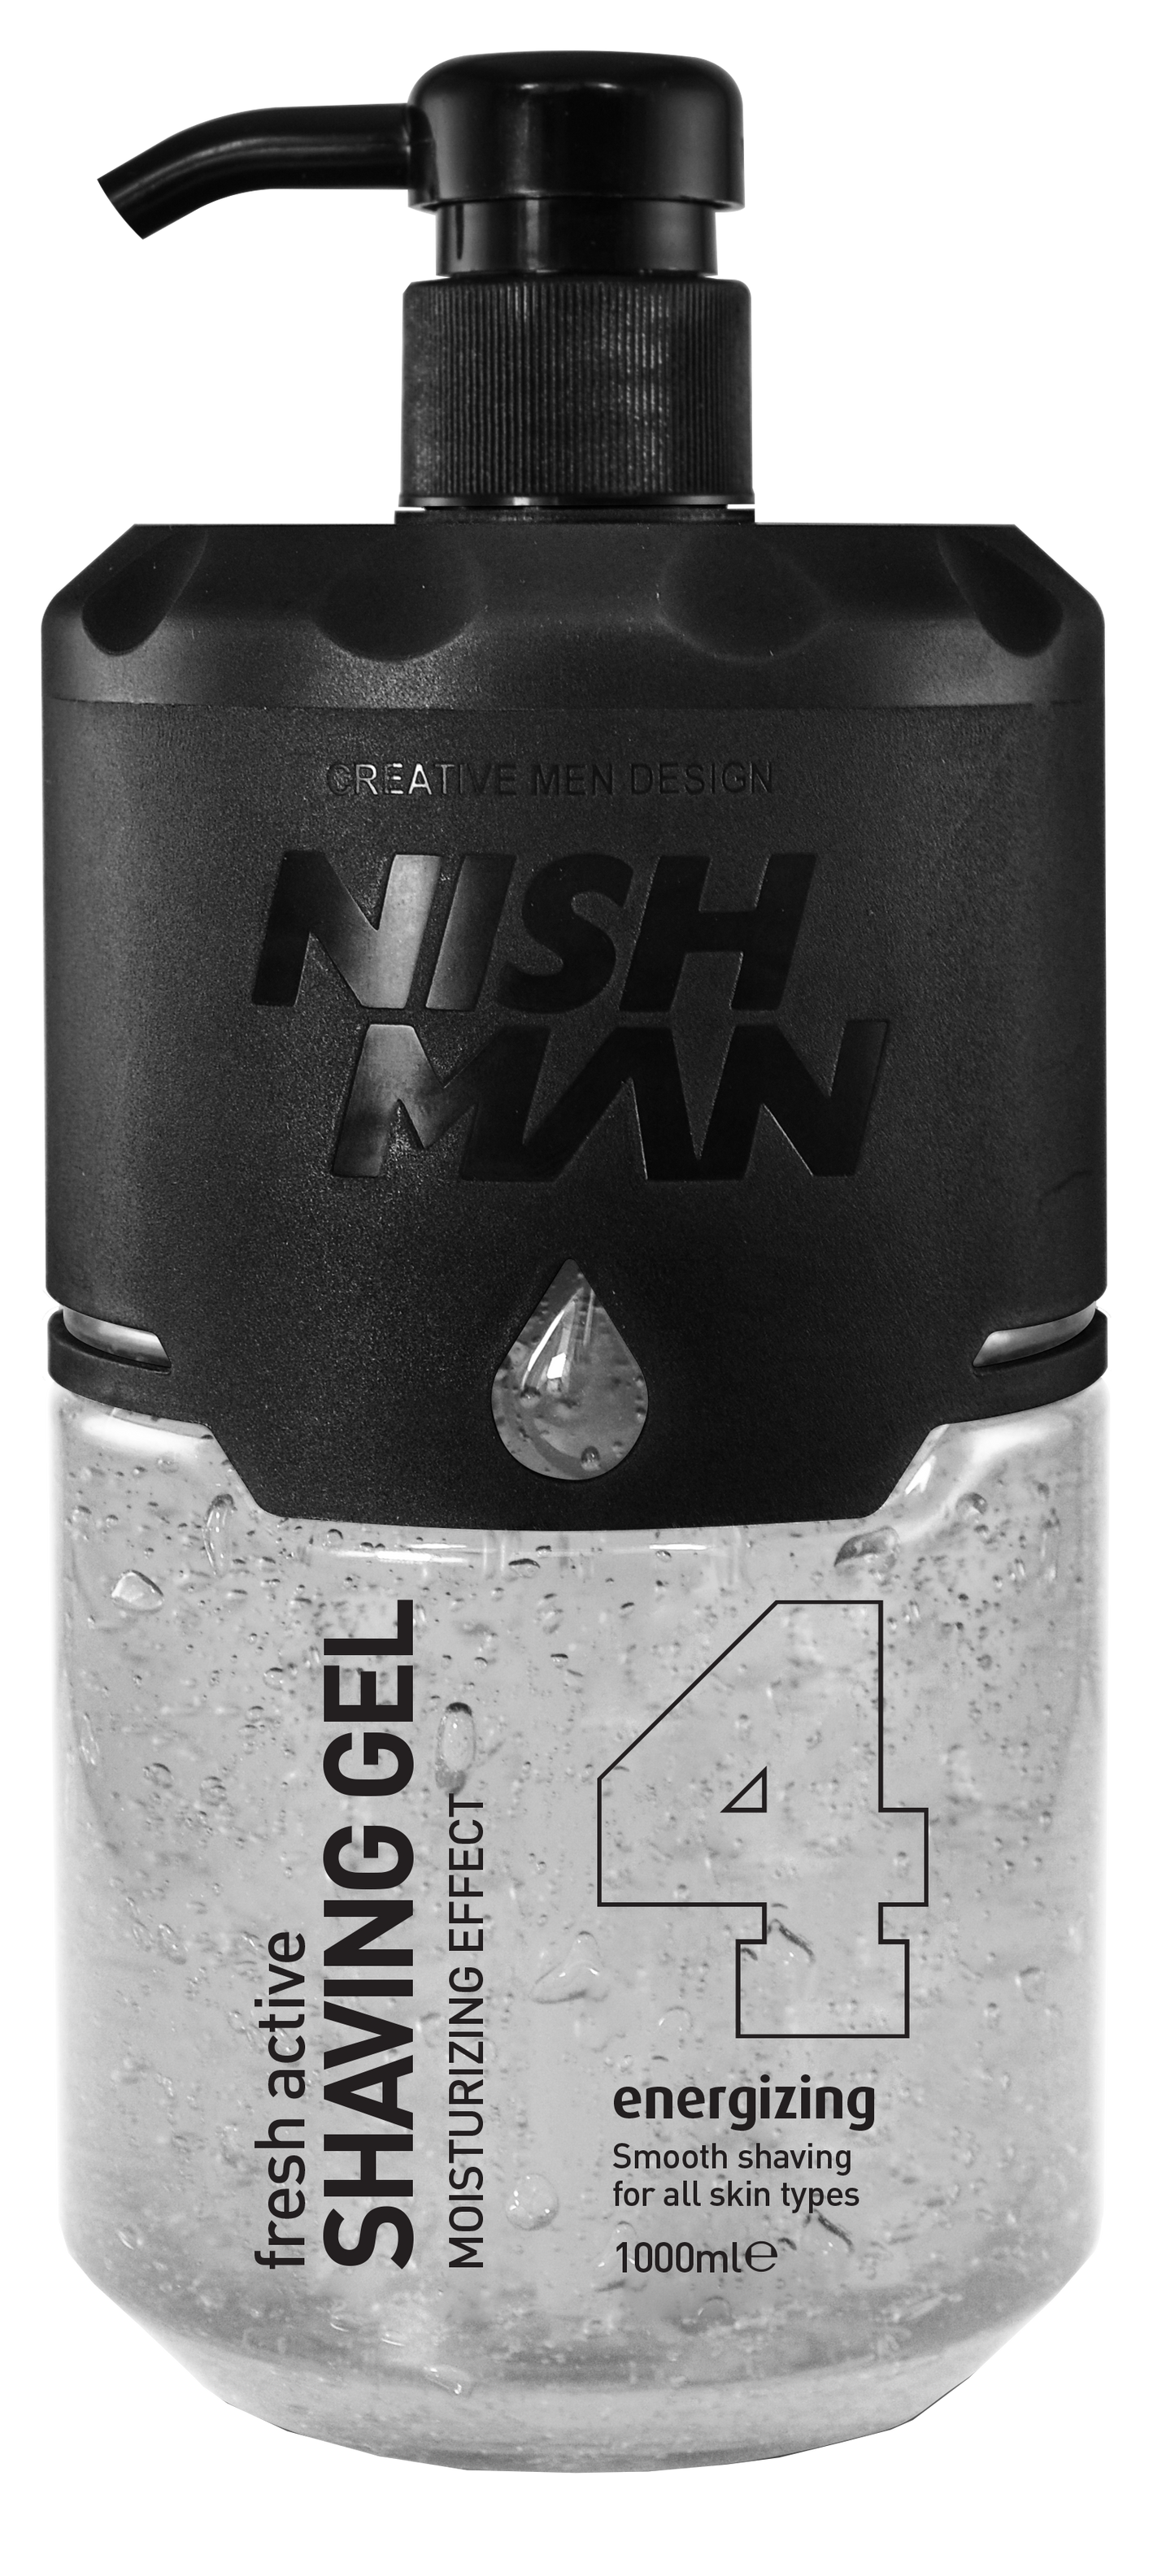 Nishman Fresh Active Shaving Clear Gel